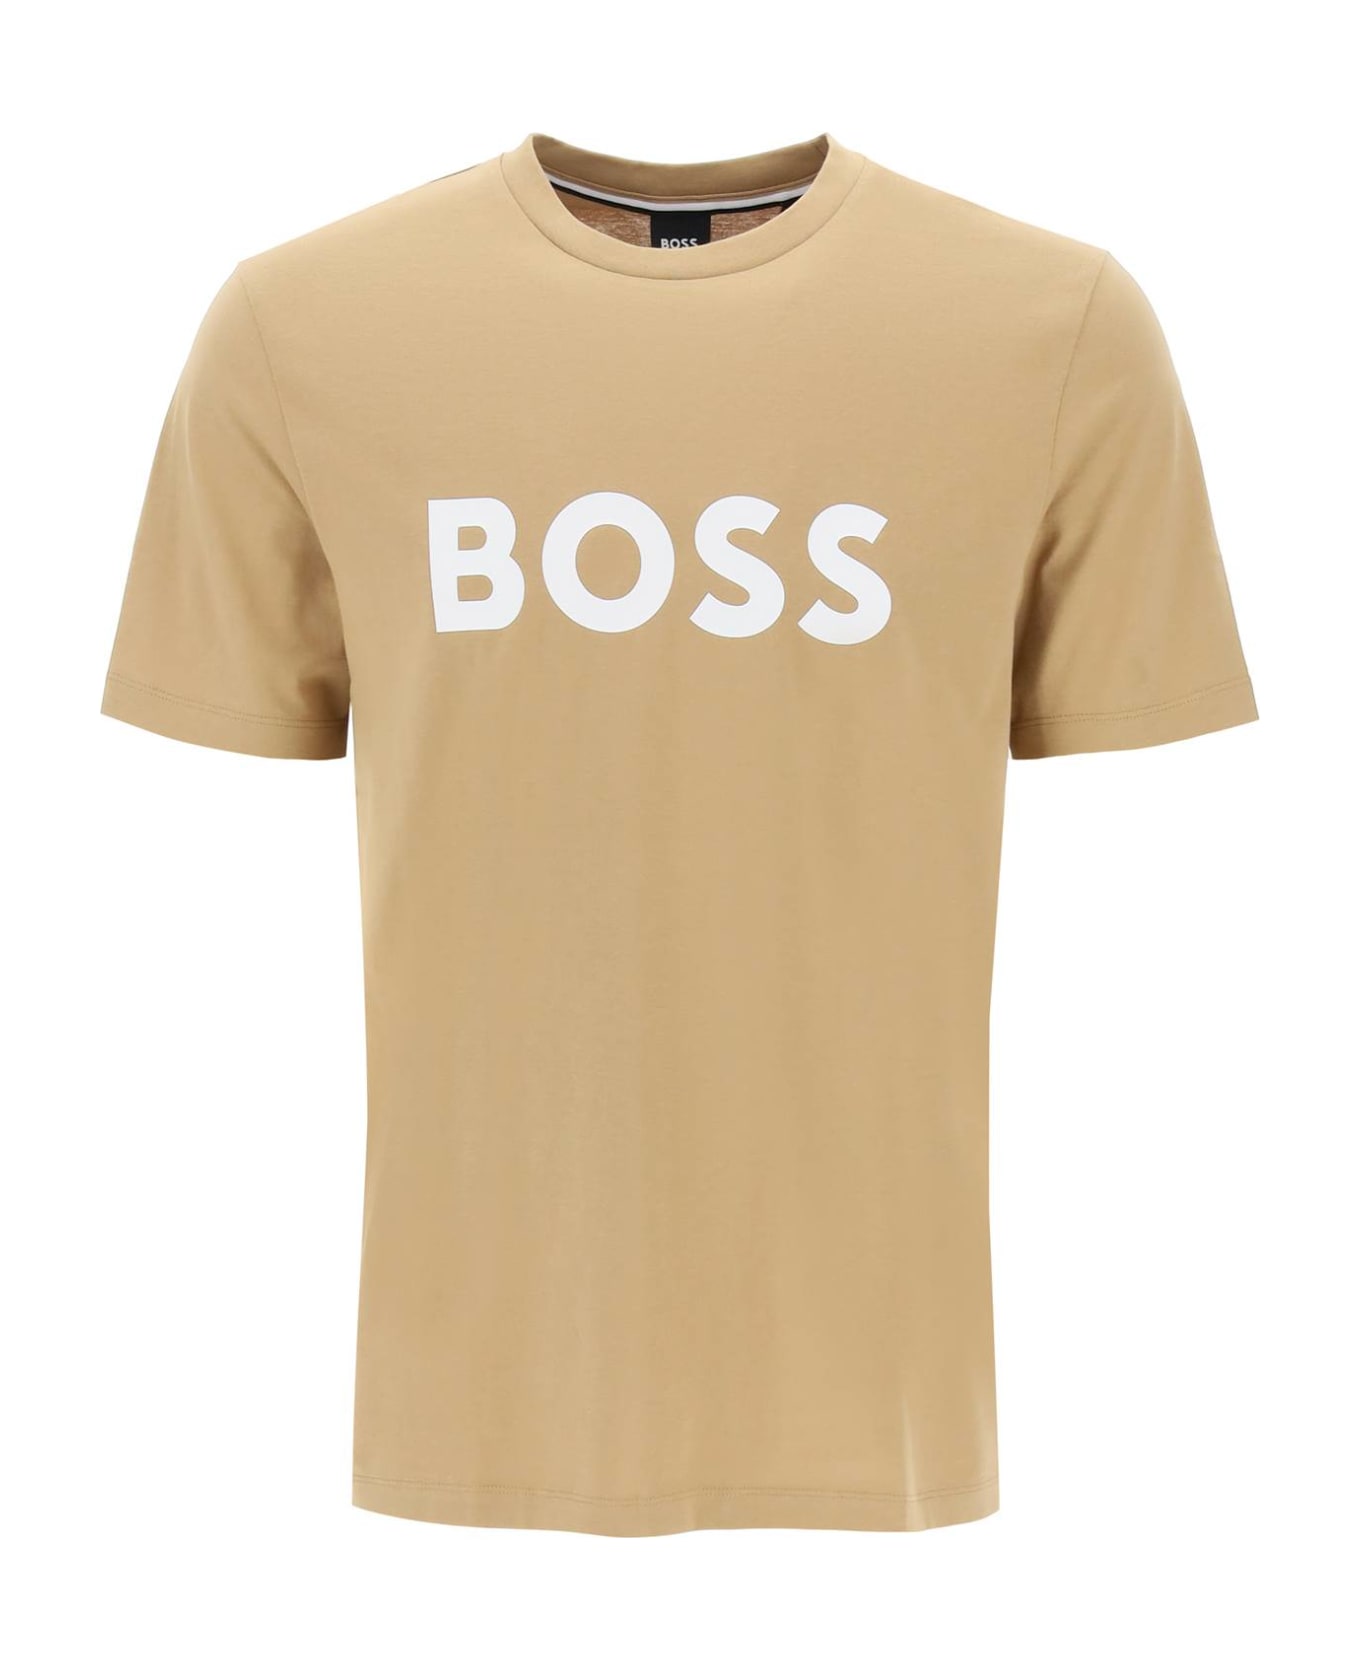 Hugo Boss Tiburt 354 Logo Print T-shirt - MEDIUM BEIGE (Beige)